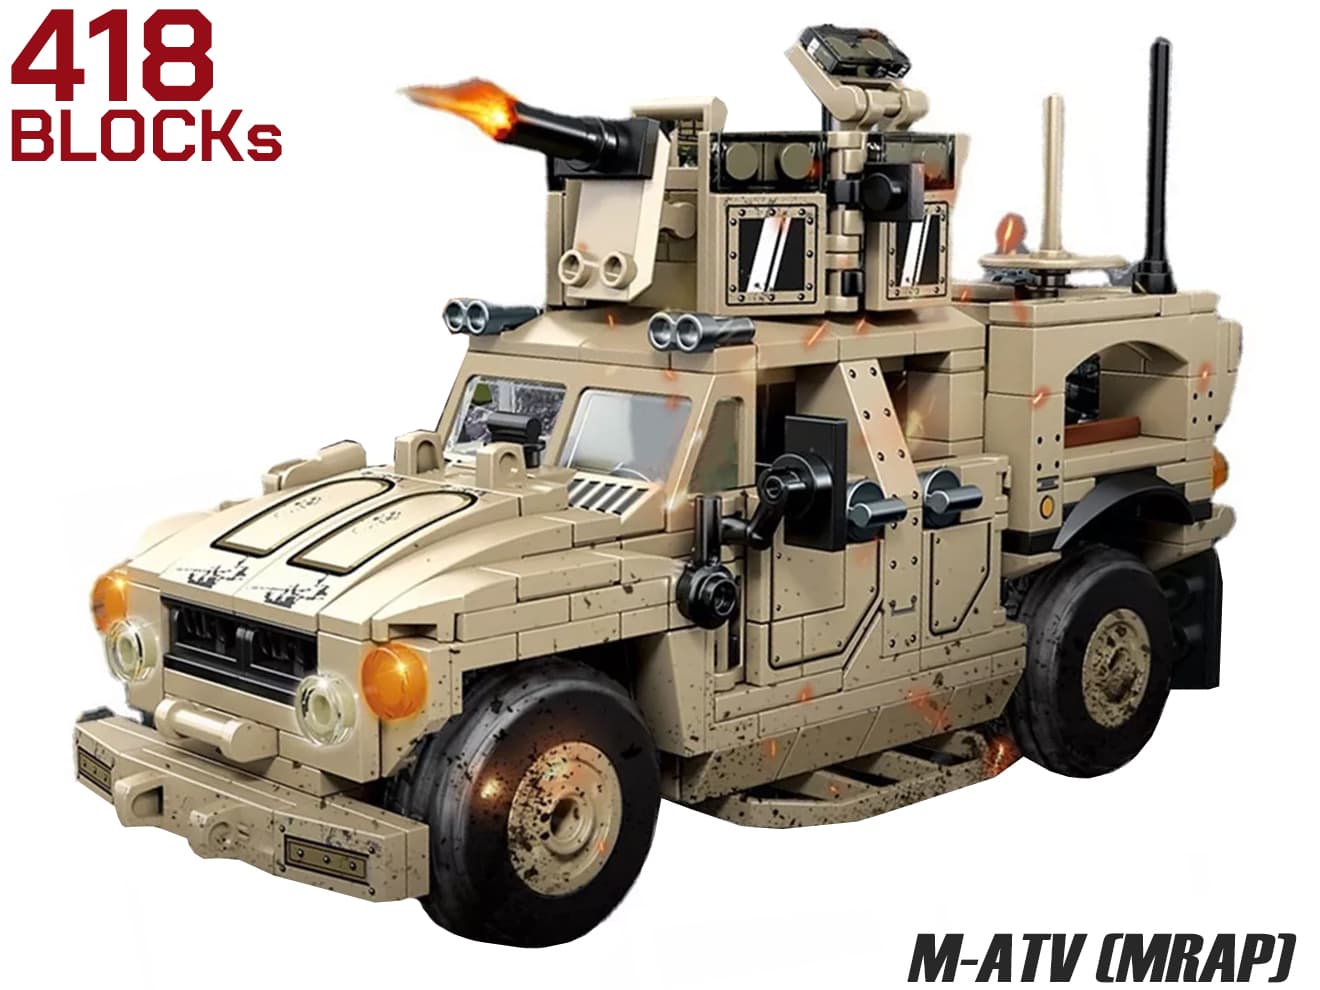 AFM M-ATV(MRAP) 耐地雷/伏撃防護装甲車 418Blocks | ミリタリーベース 